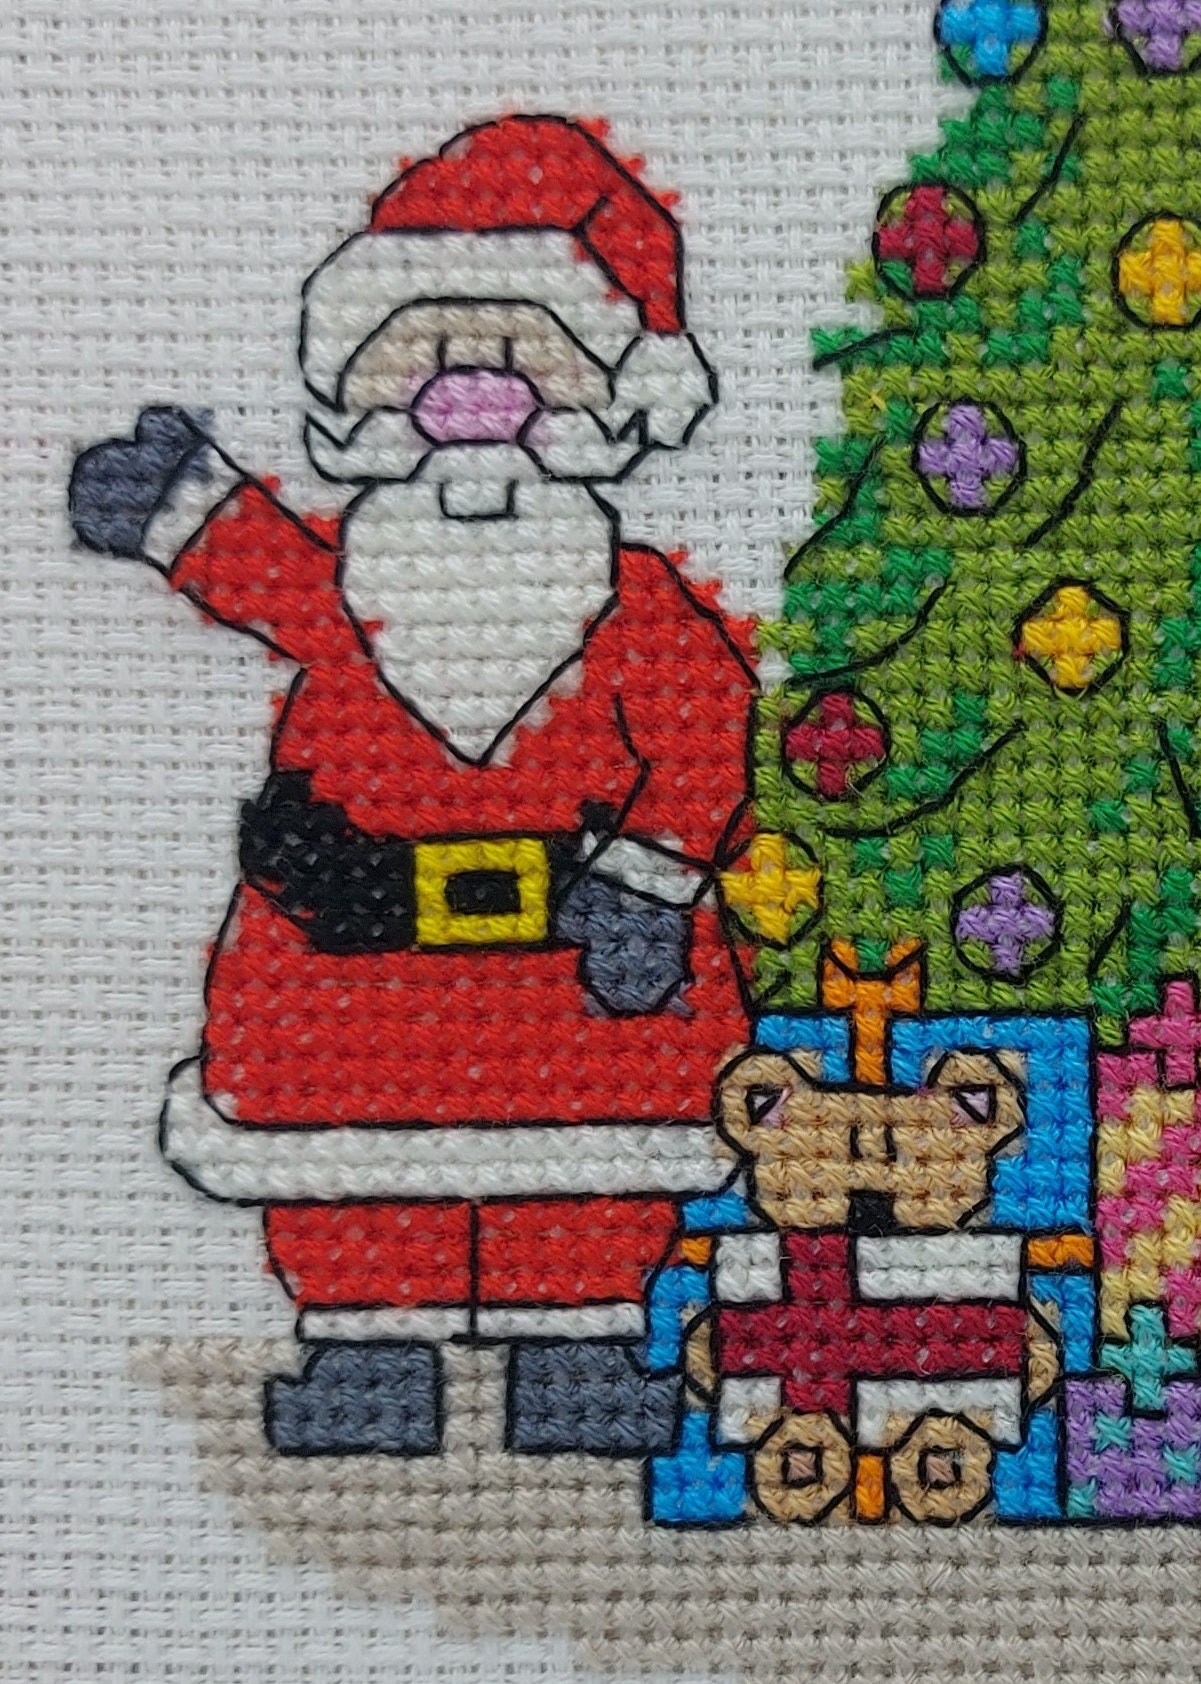 A Christmas Scene Cross Stitch Kit, Xmas Cross Stitch, Christmas Cross  Stitch, Christmas Craft, Festive Cross Stitch Pattern, 